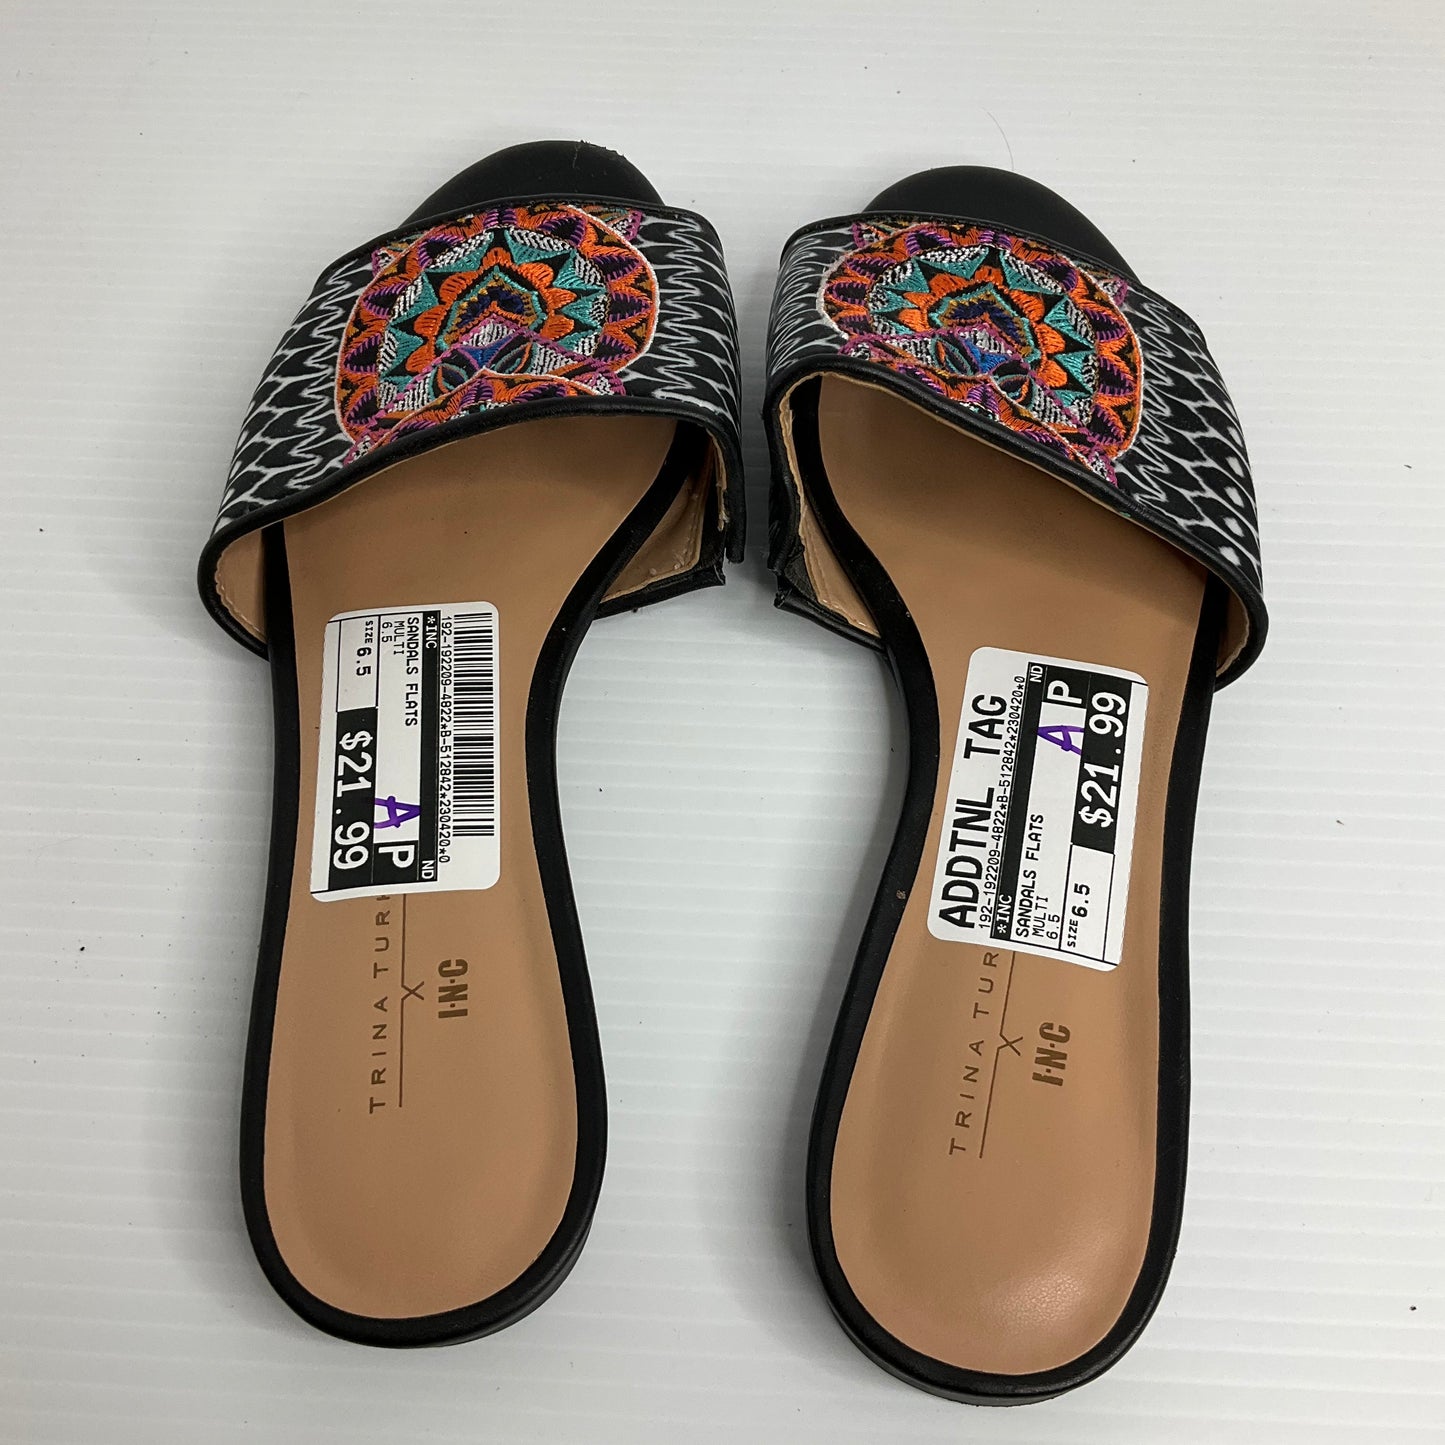 Multi-colored Sandals Flats Inc, Size 6.5